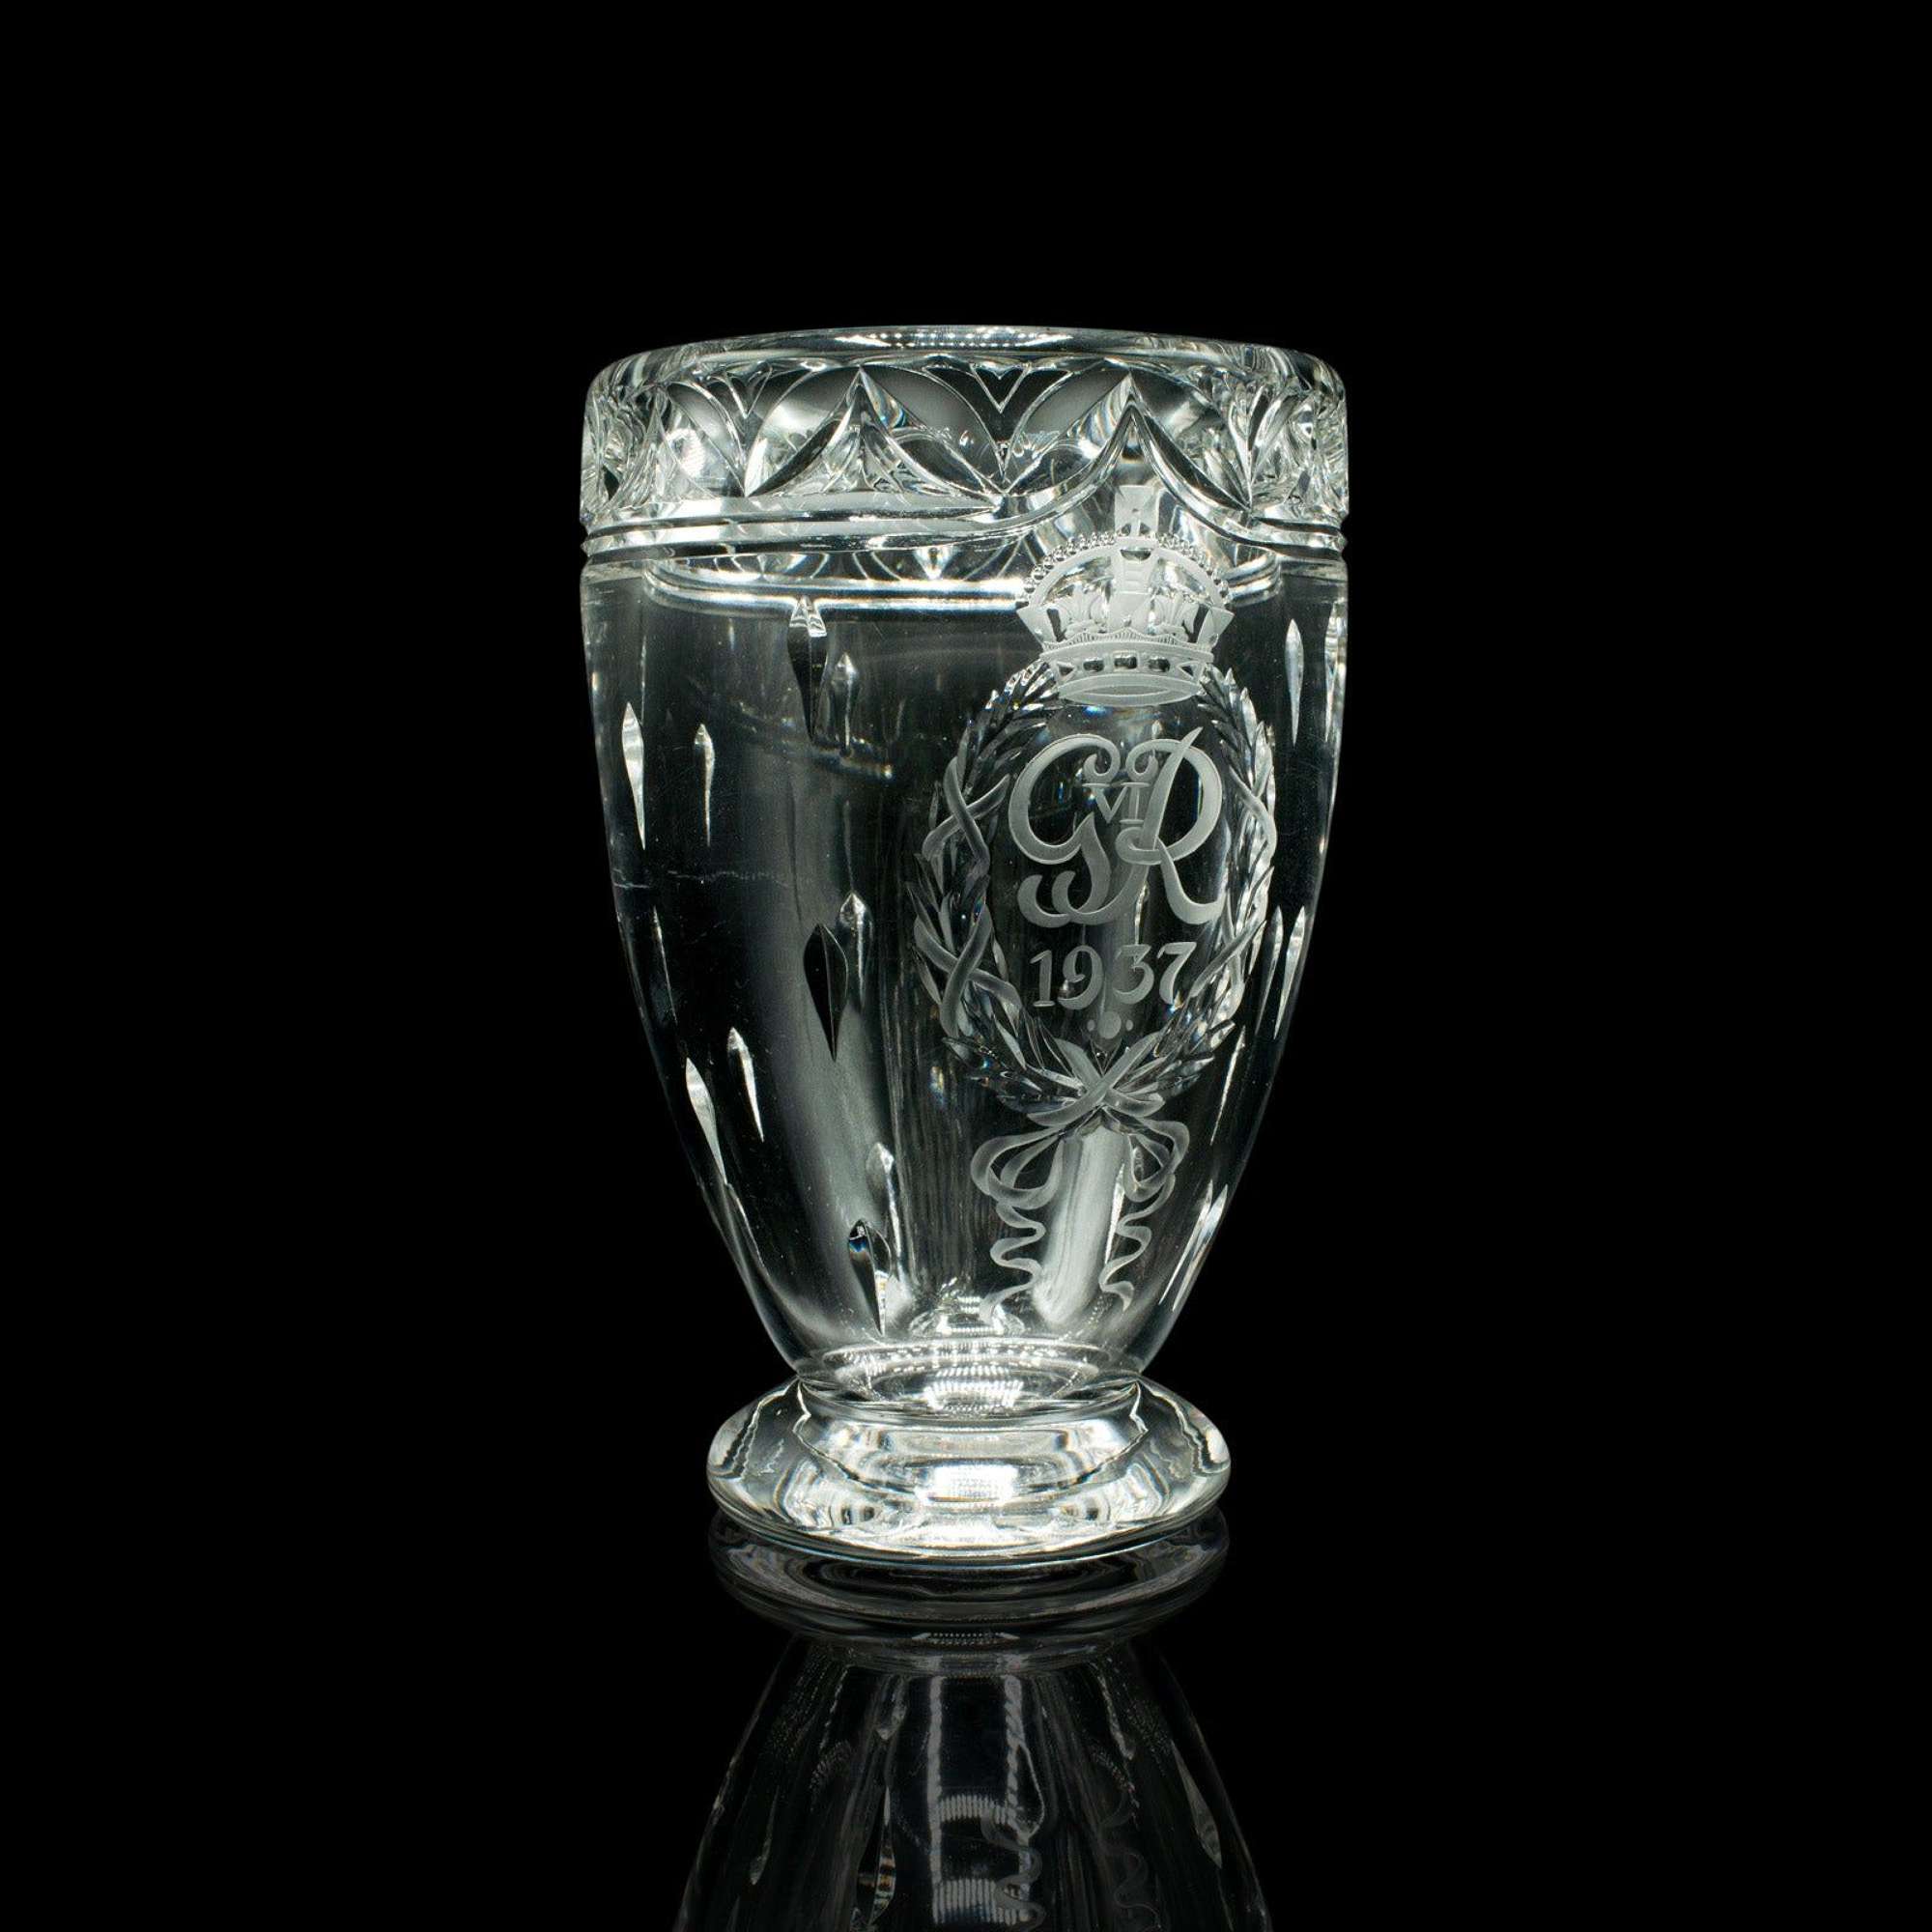 Large Vintage Coronation Vase, English, Glass, George VI, Royal, Bottle Cooler